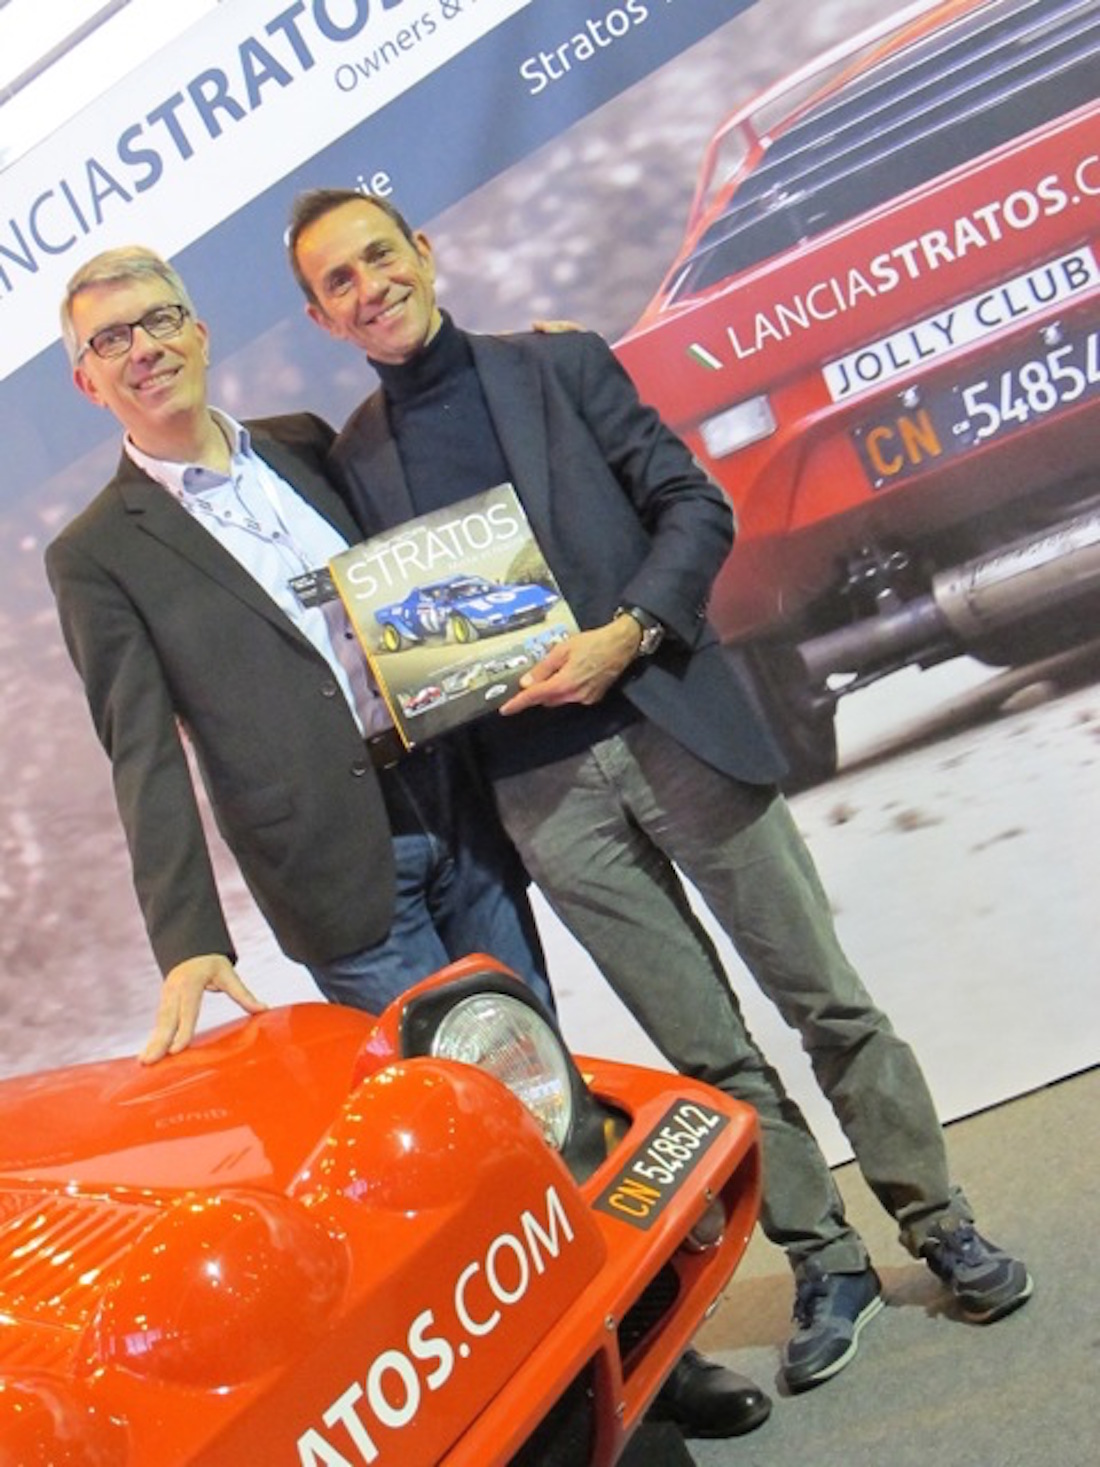 Erik Comas et le livre Lancia Stratos